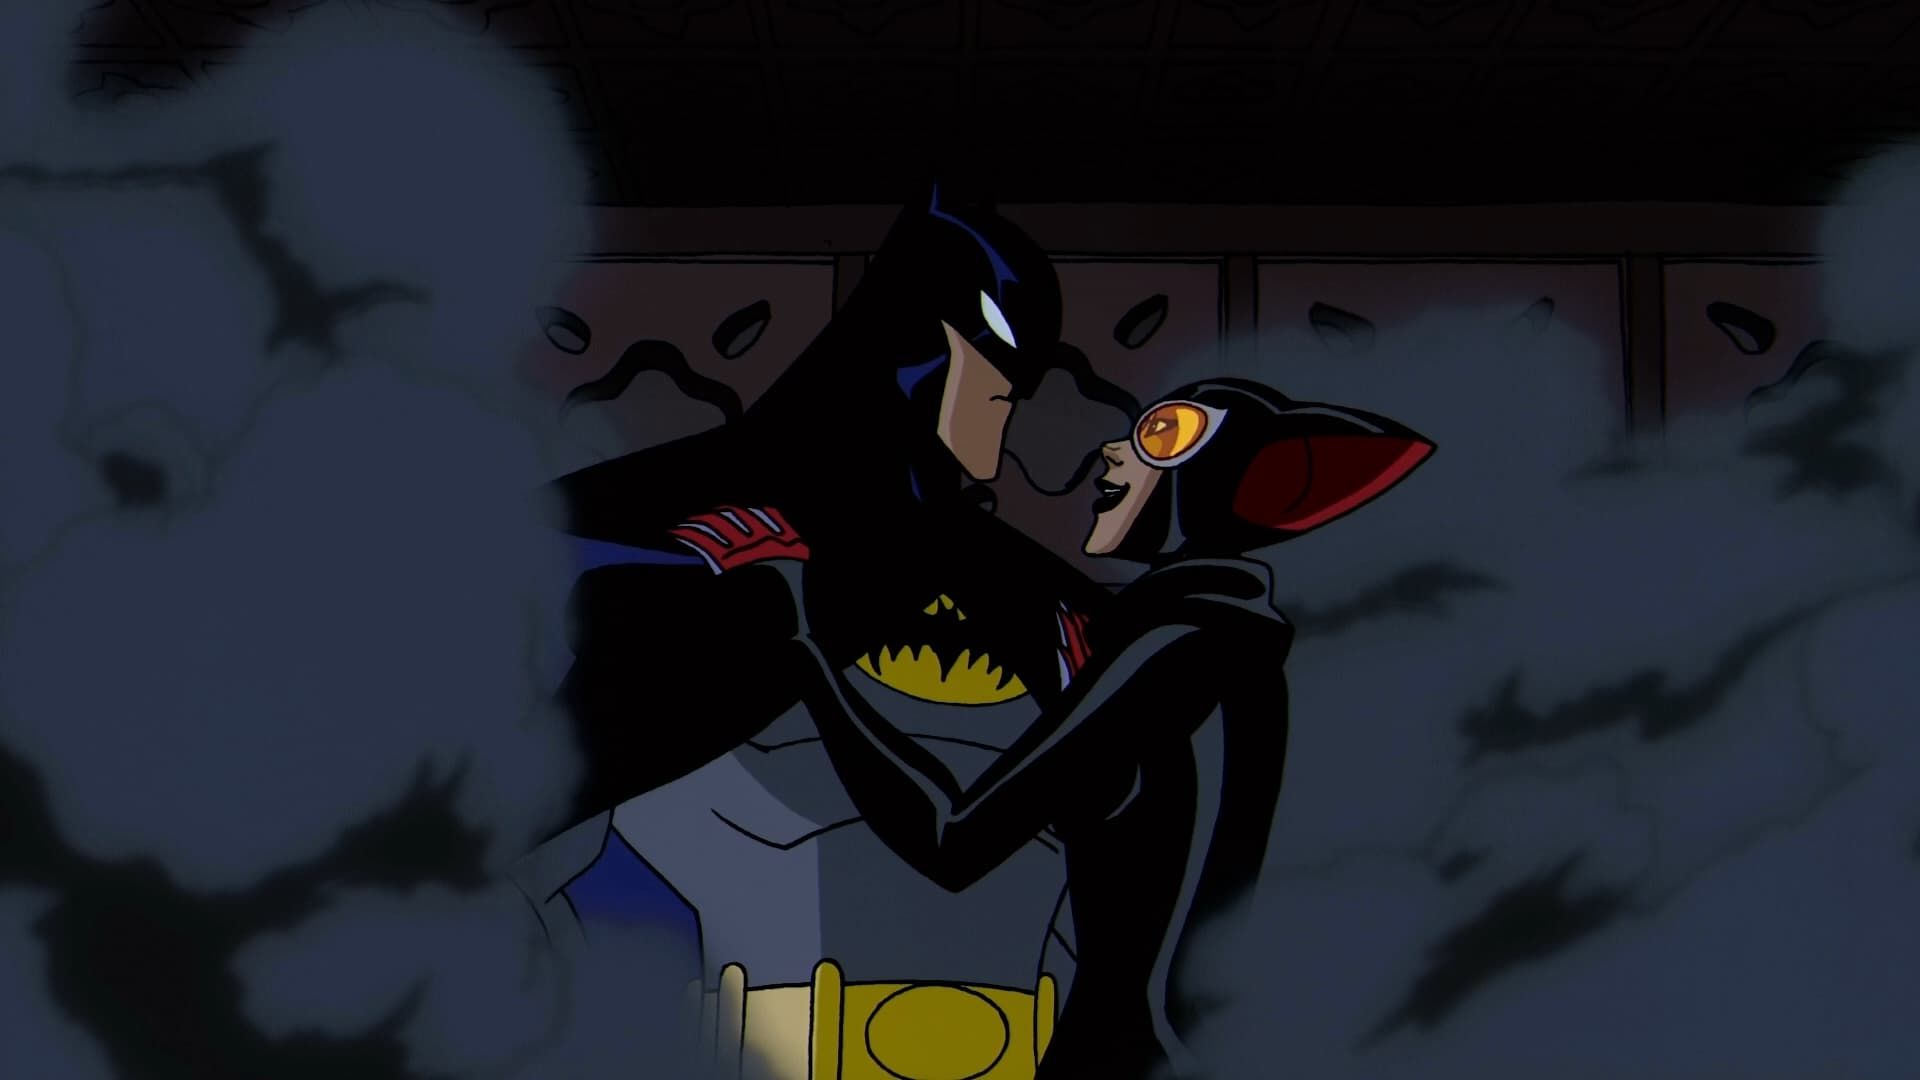 The Batman background